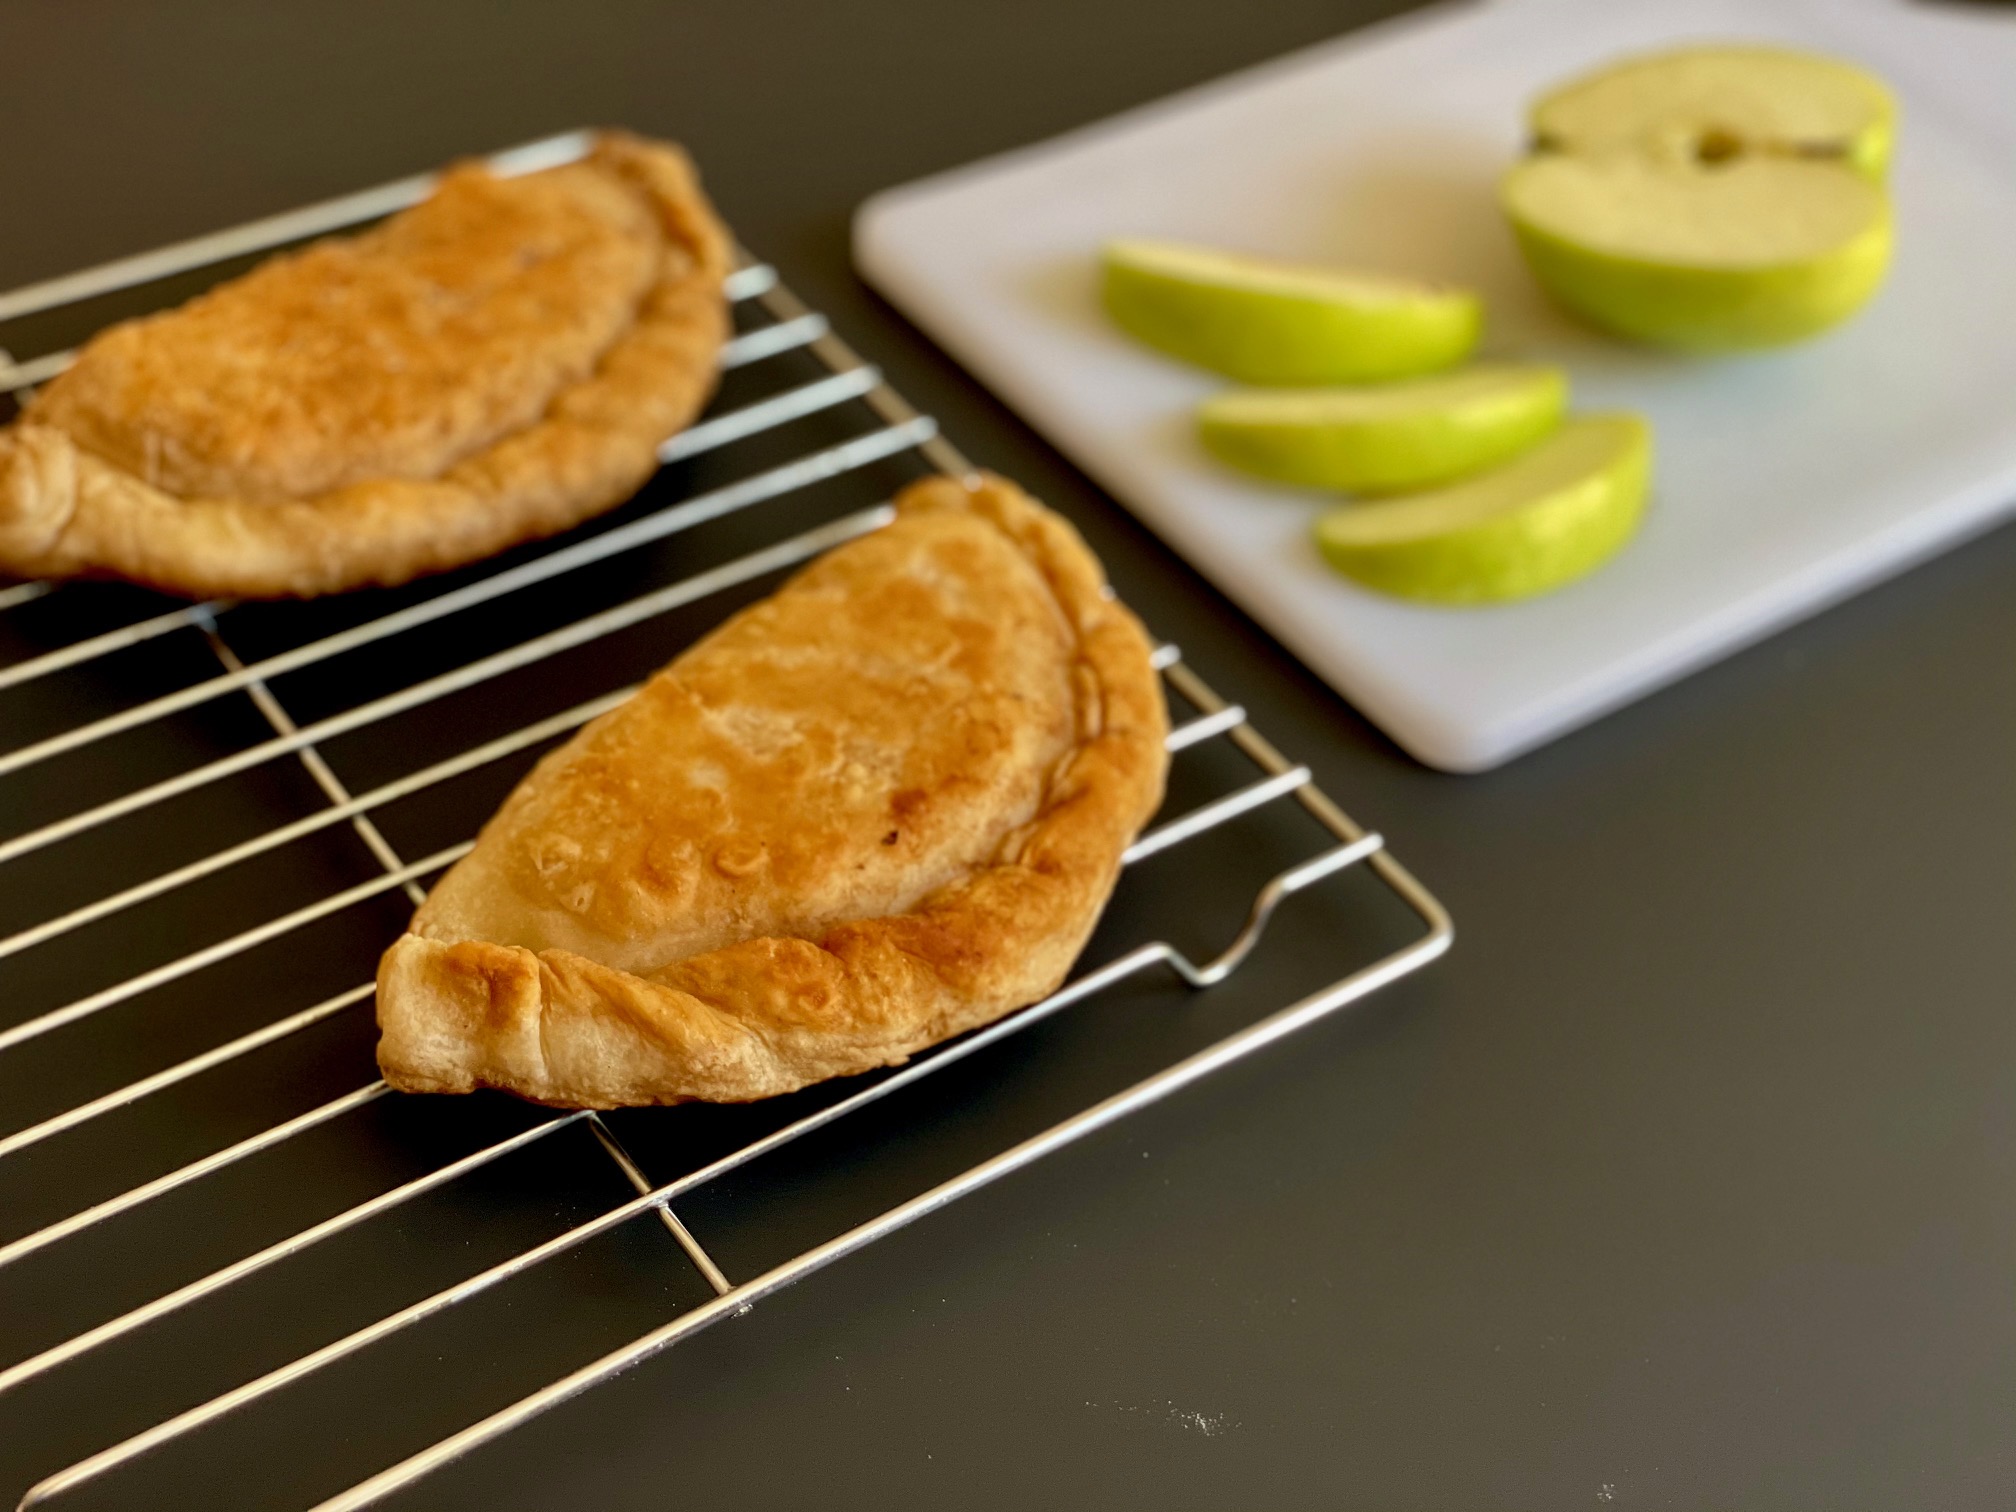 Fried Apple Pies